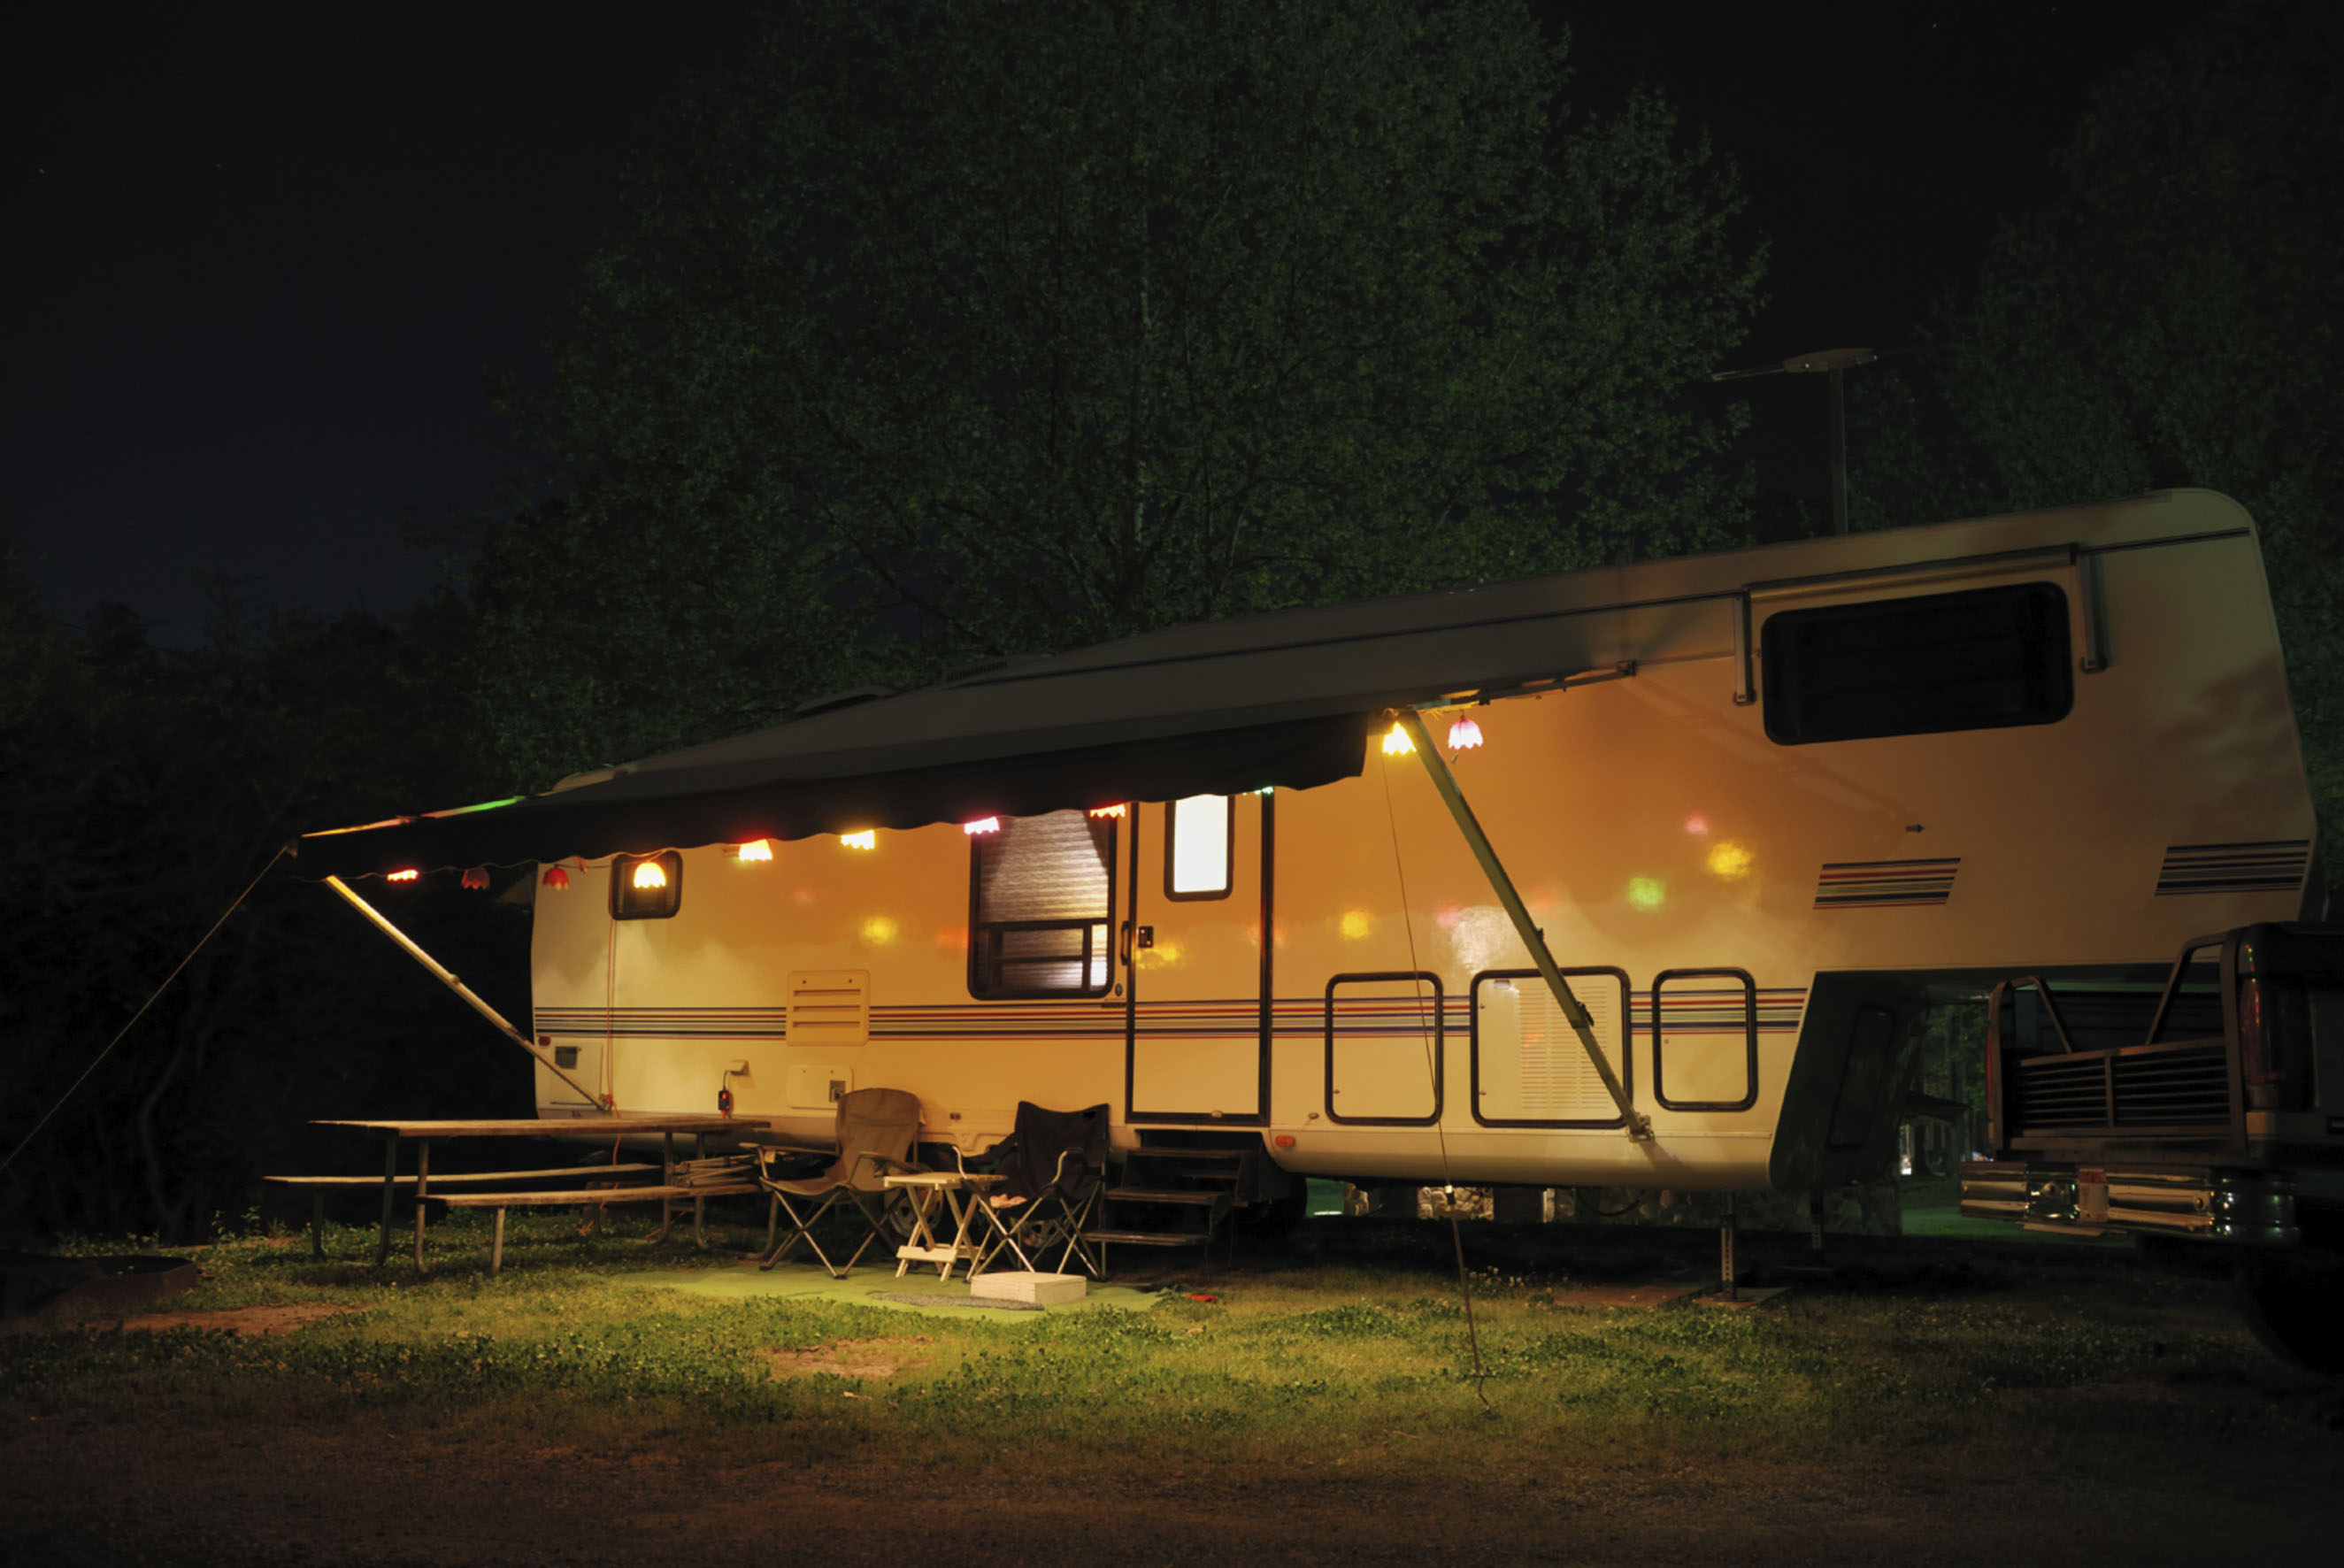 Camping at night vakantiebeurs blog camper